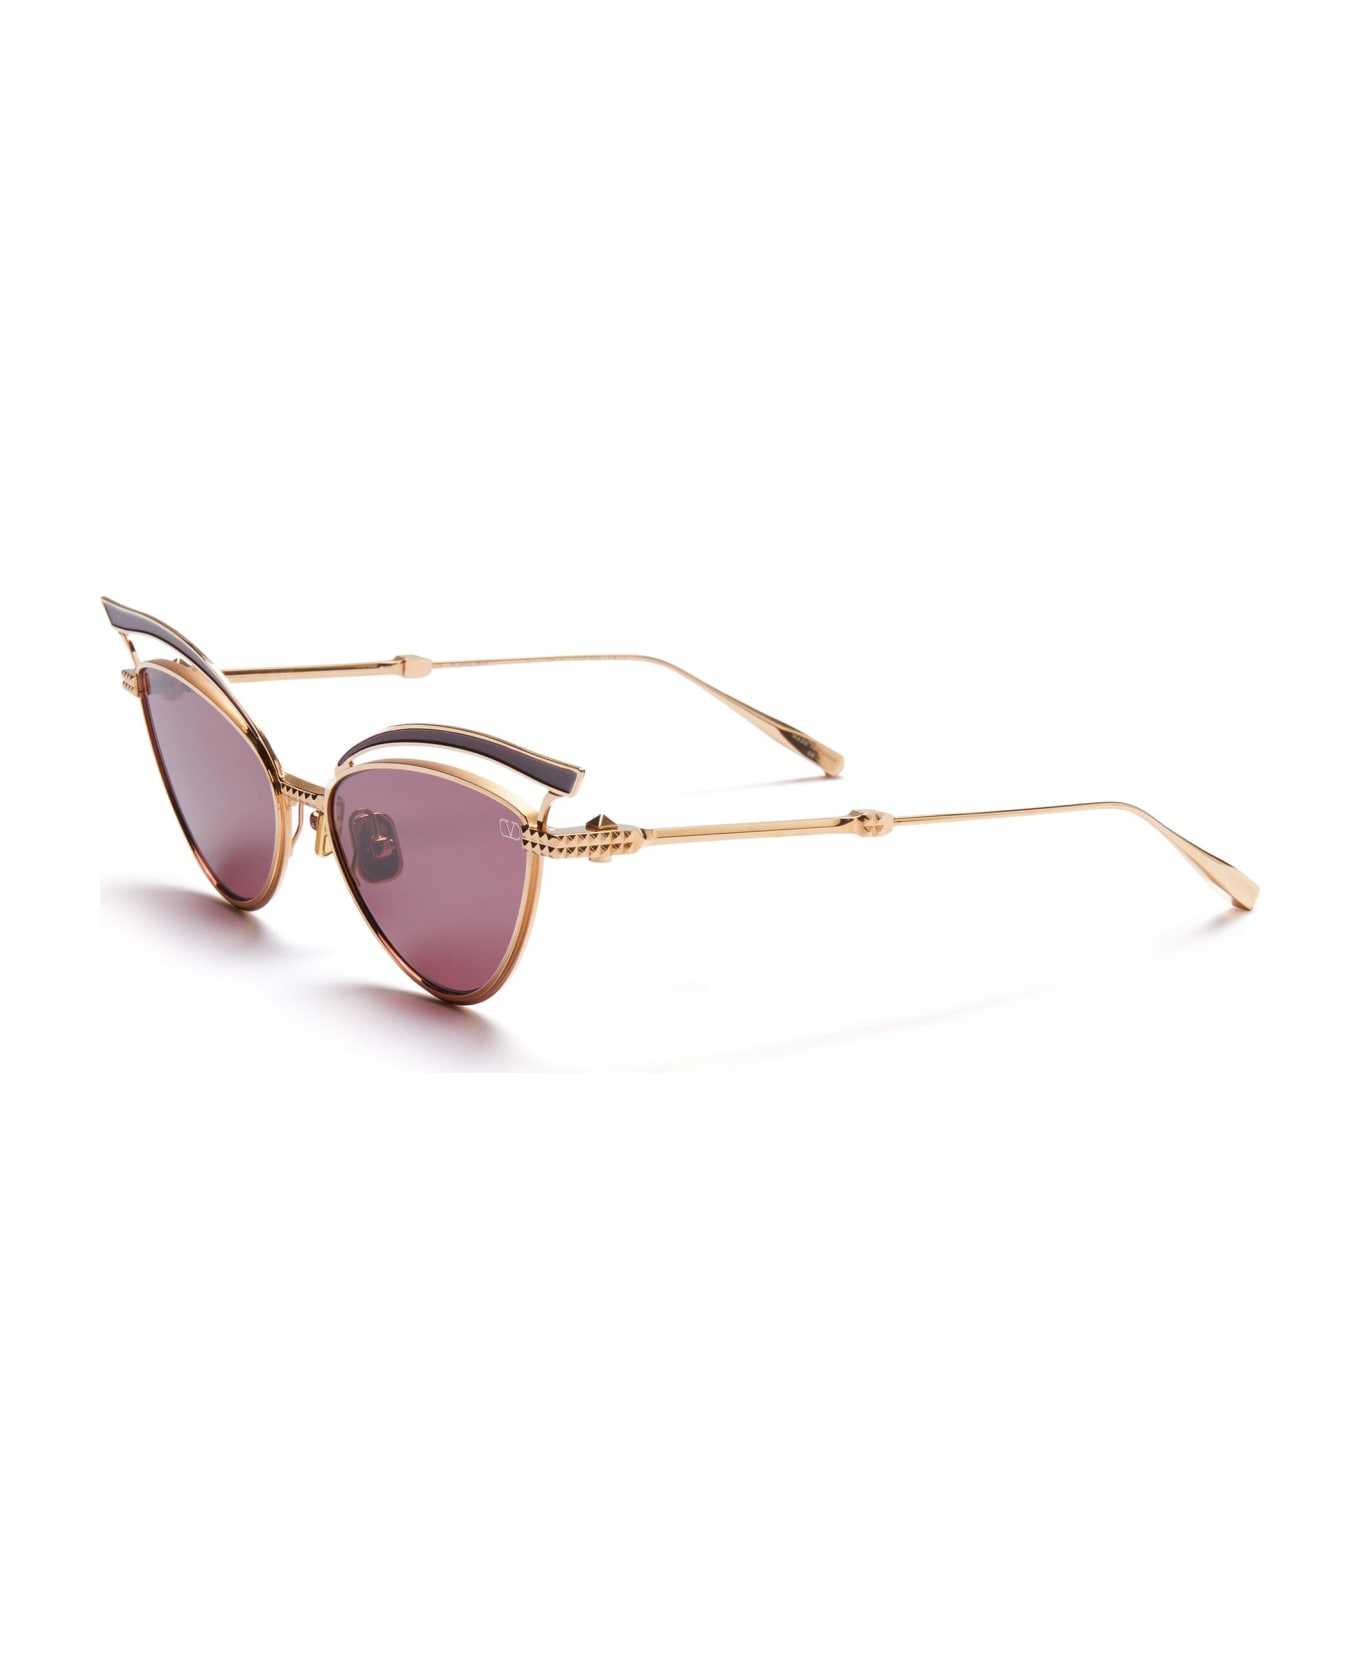 Valentino Eyewear Glassliner - Gold / Burgundy Sunglasses - Gold